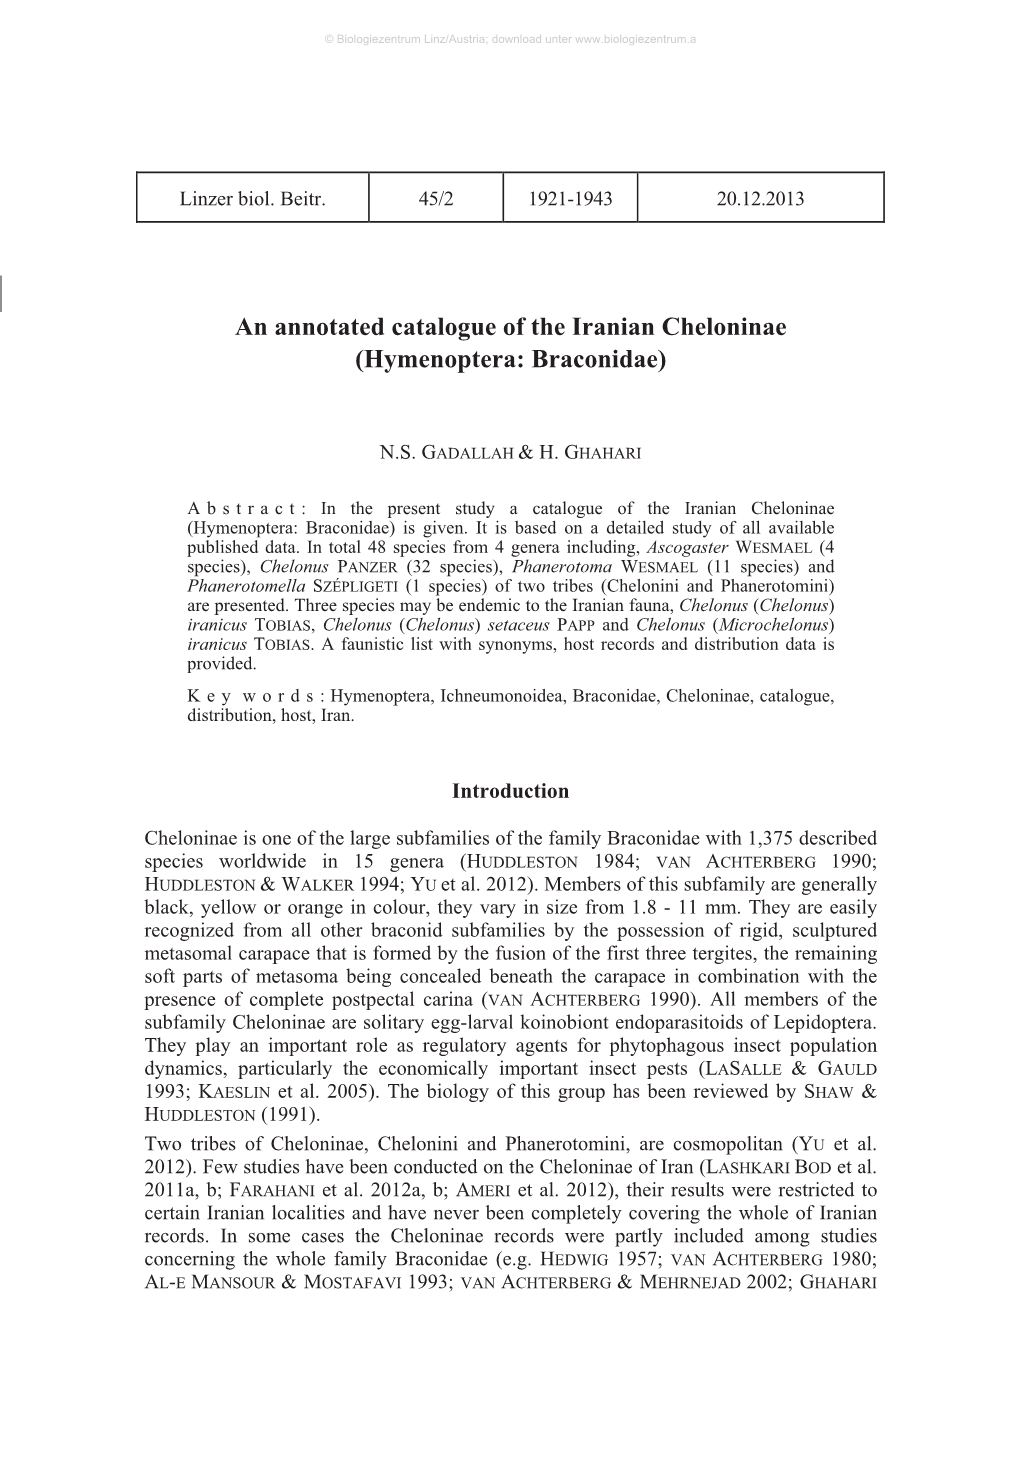 An Annotated Catalogue of the Iranian Cheloninae (Hymenoptera: Braconidae)